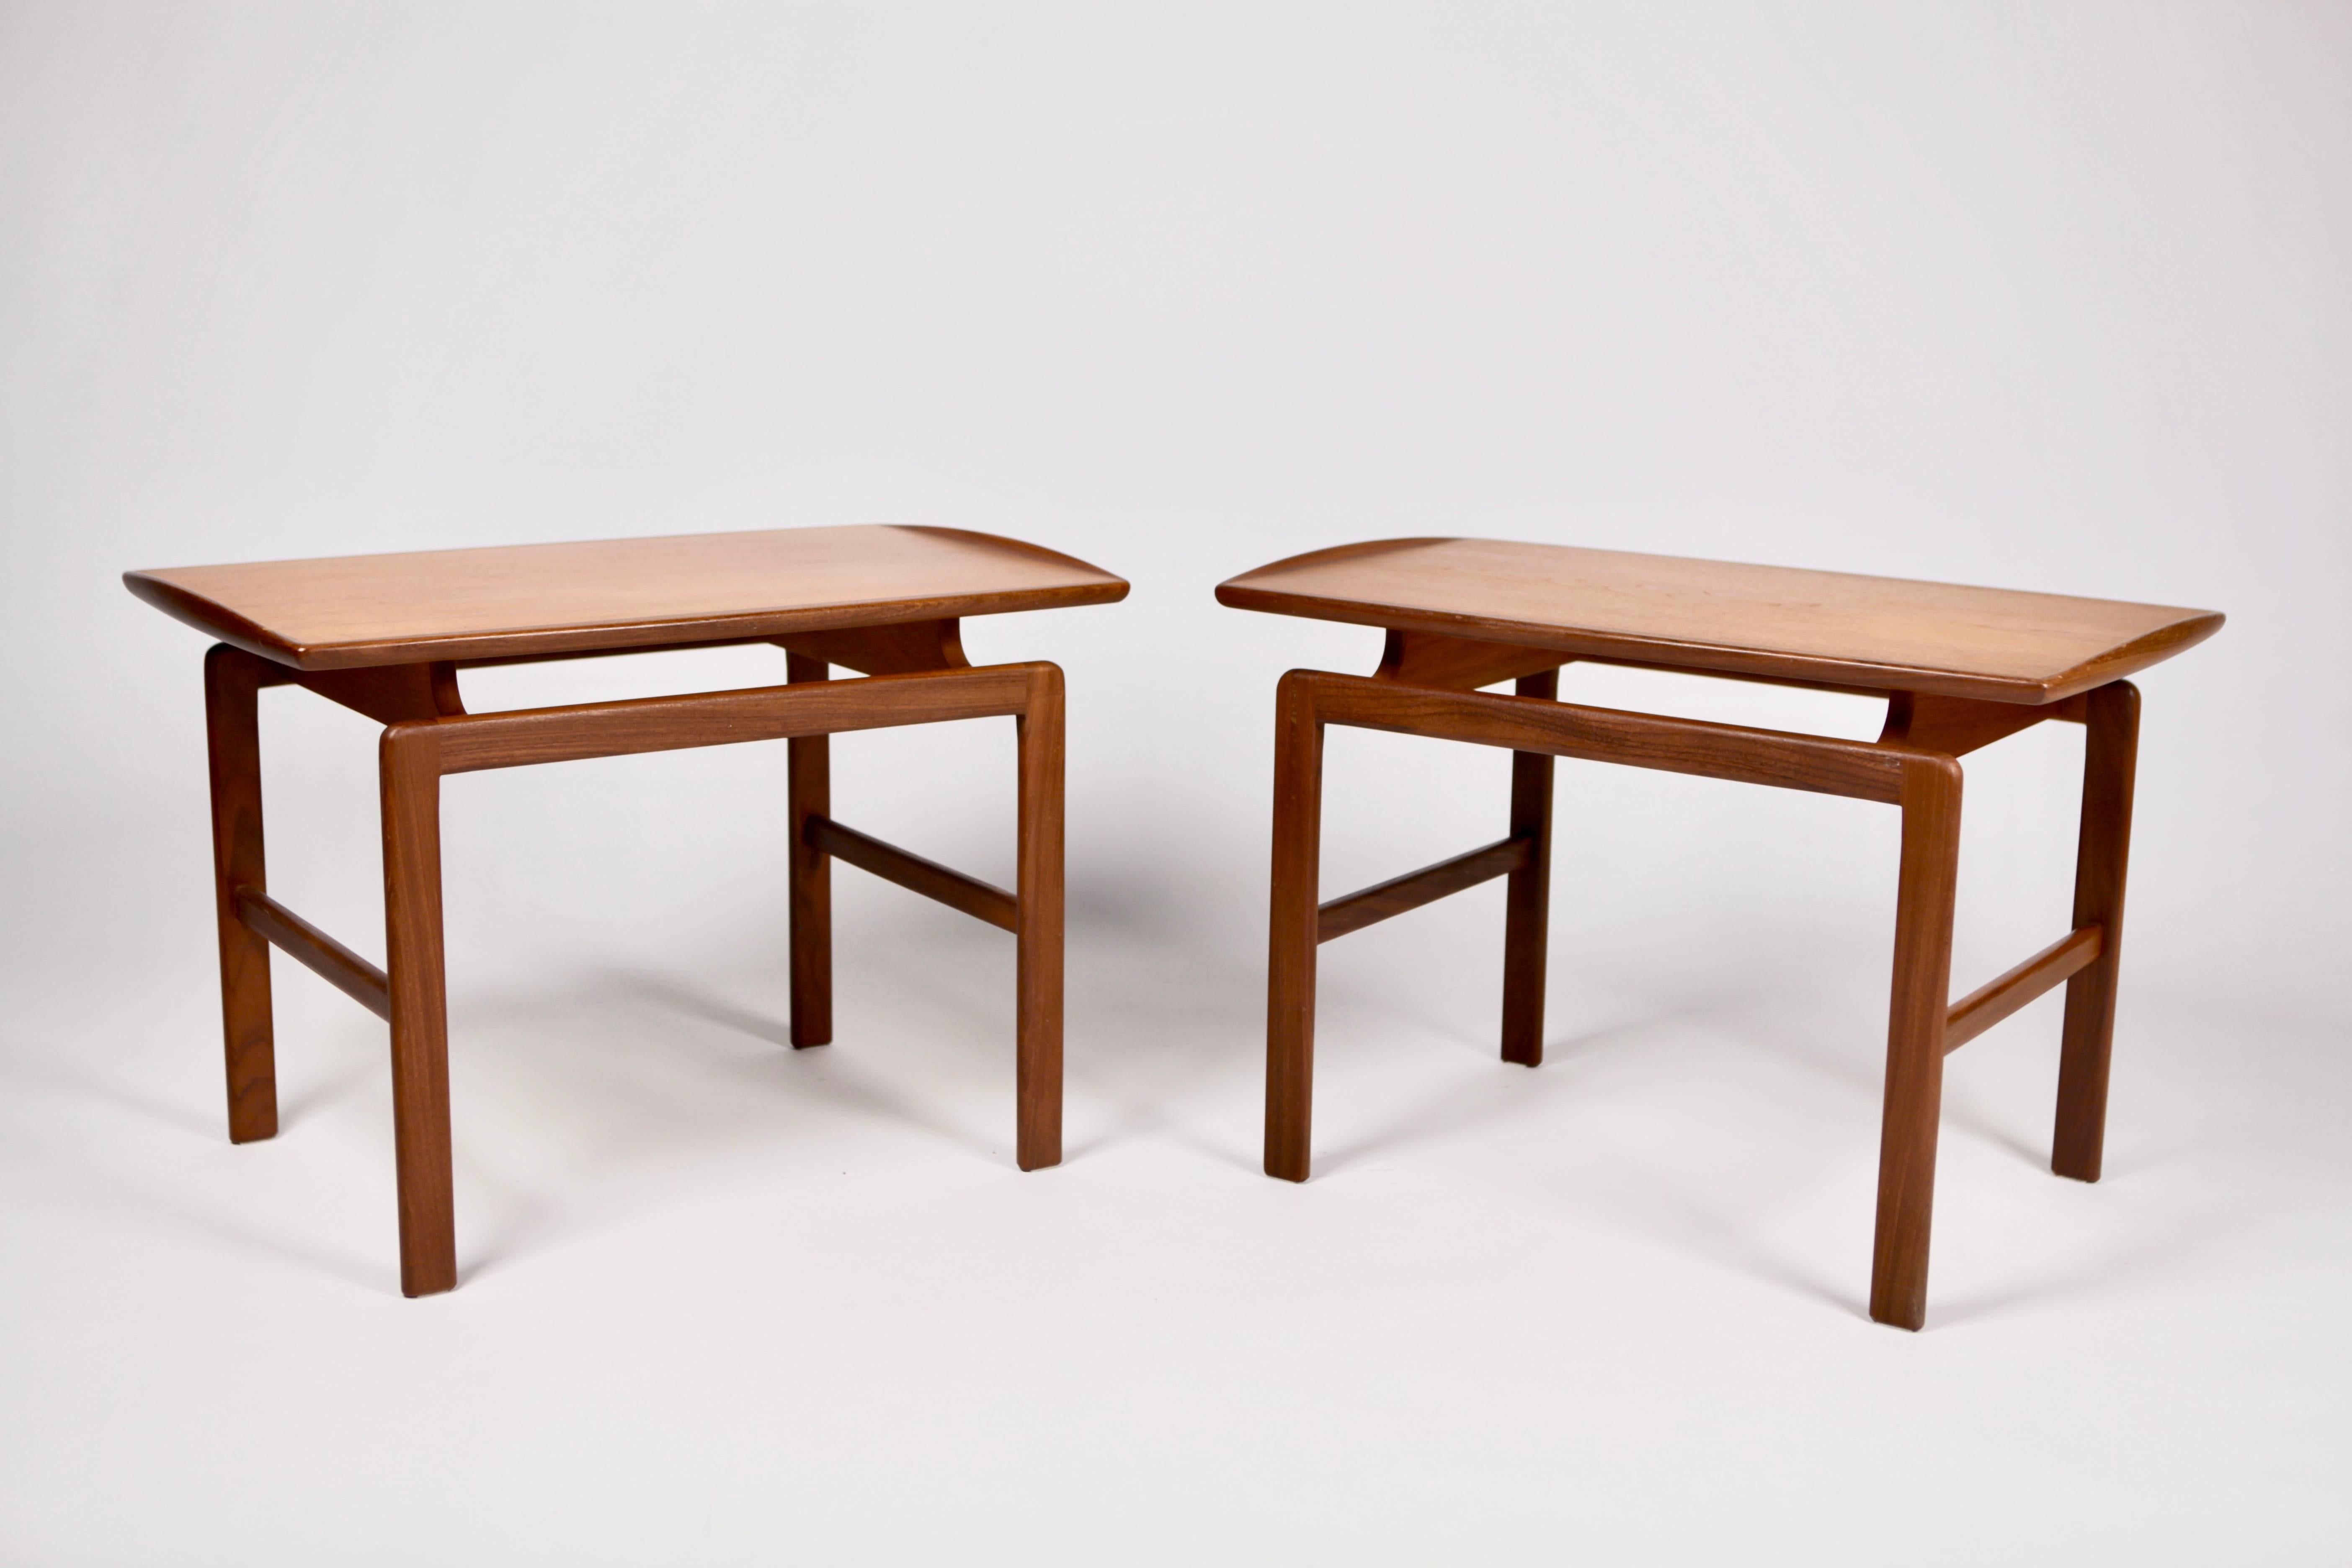 A pair of teak side tables, model 